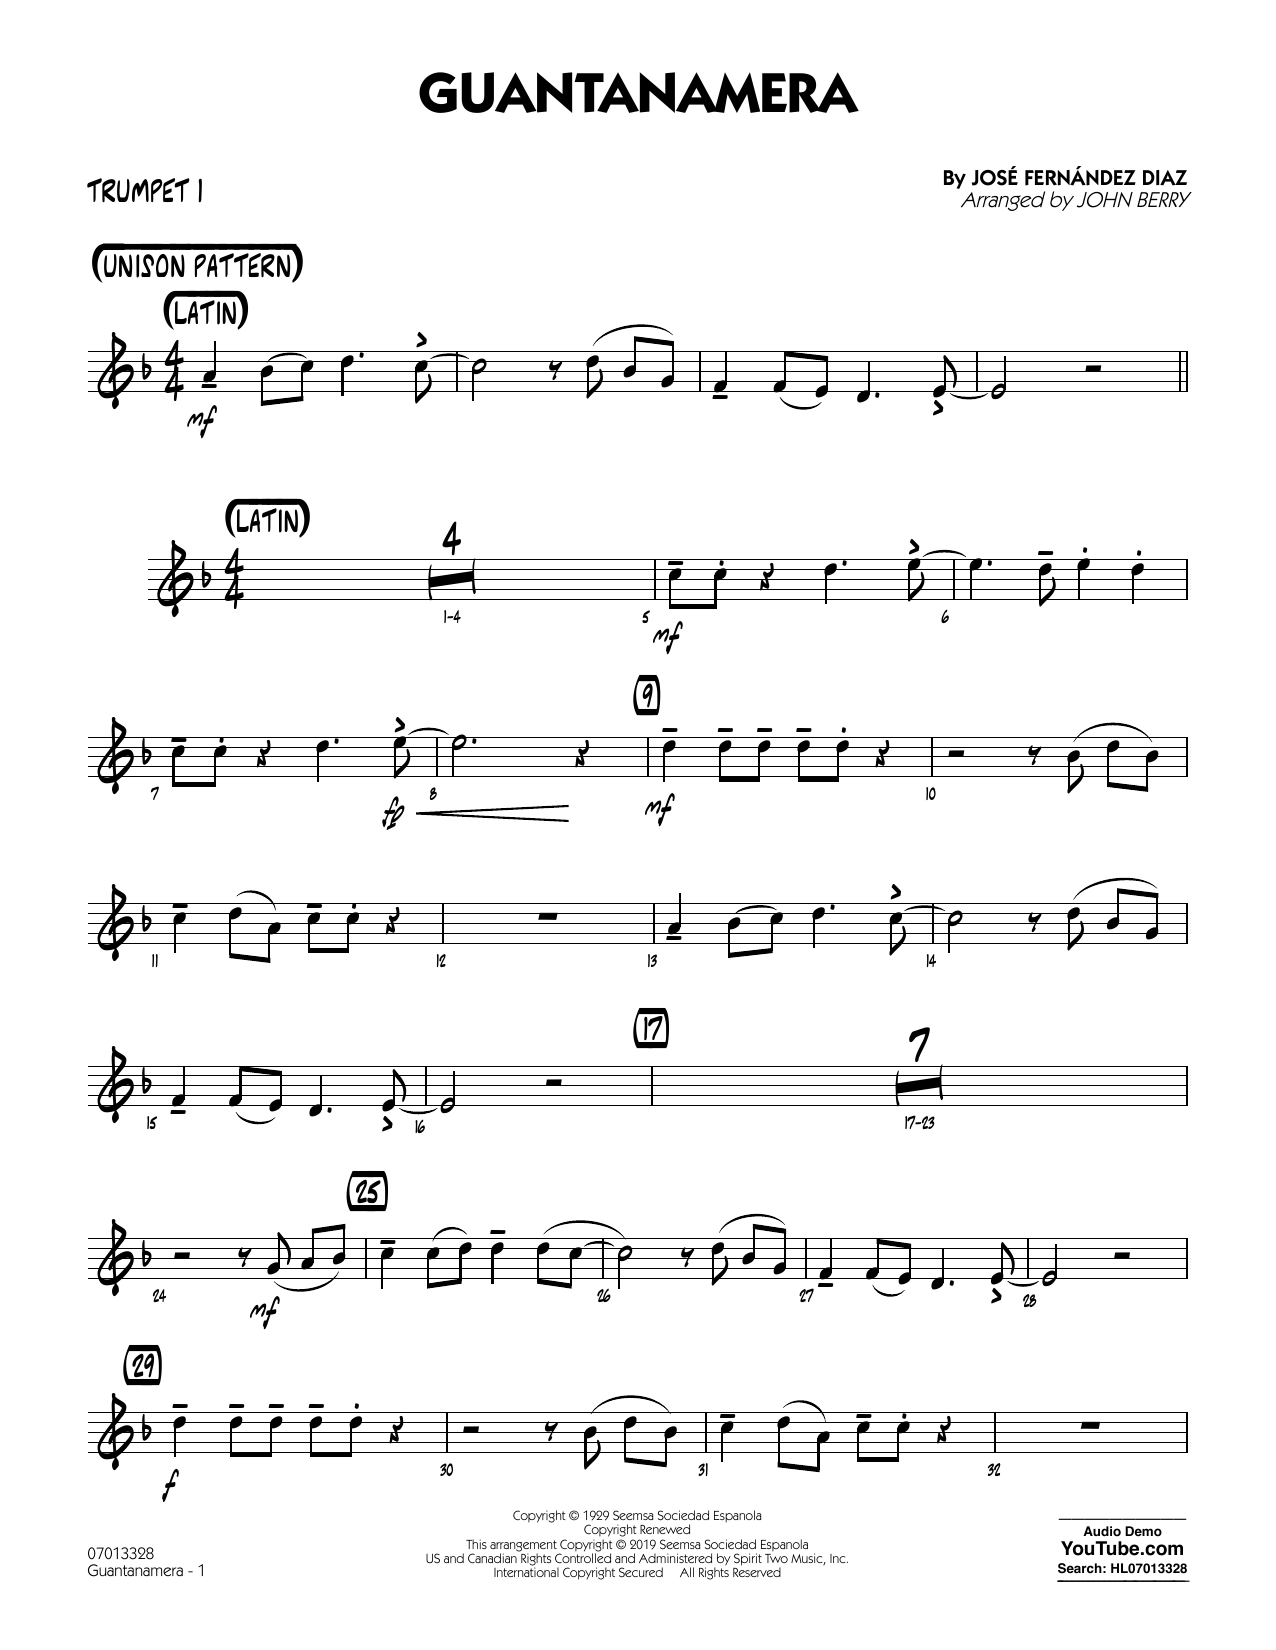 José Fernández Diaz Guantanamera (arr. John Berry) - Trumpet 1 Sheet Music Notes & Chords for Jazz Ensemble - Download or Print PDF